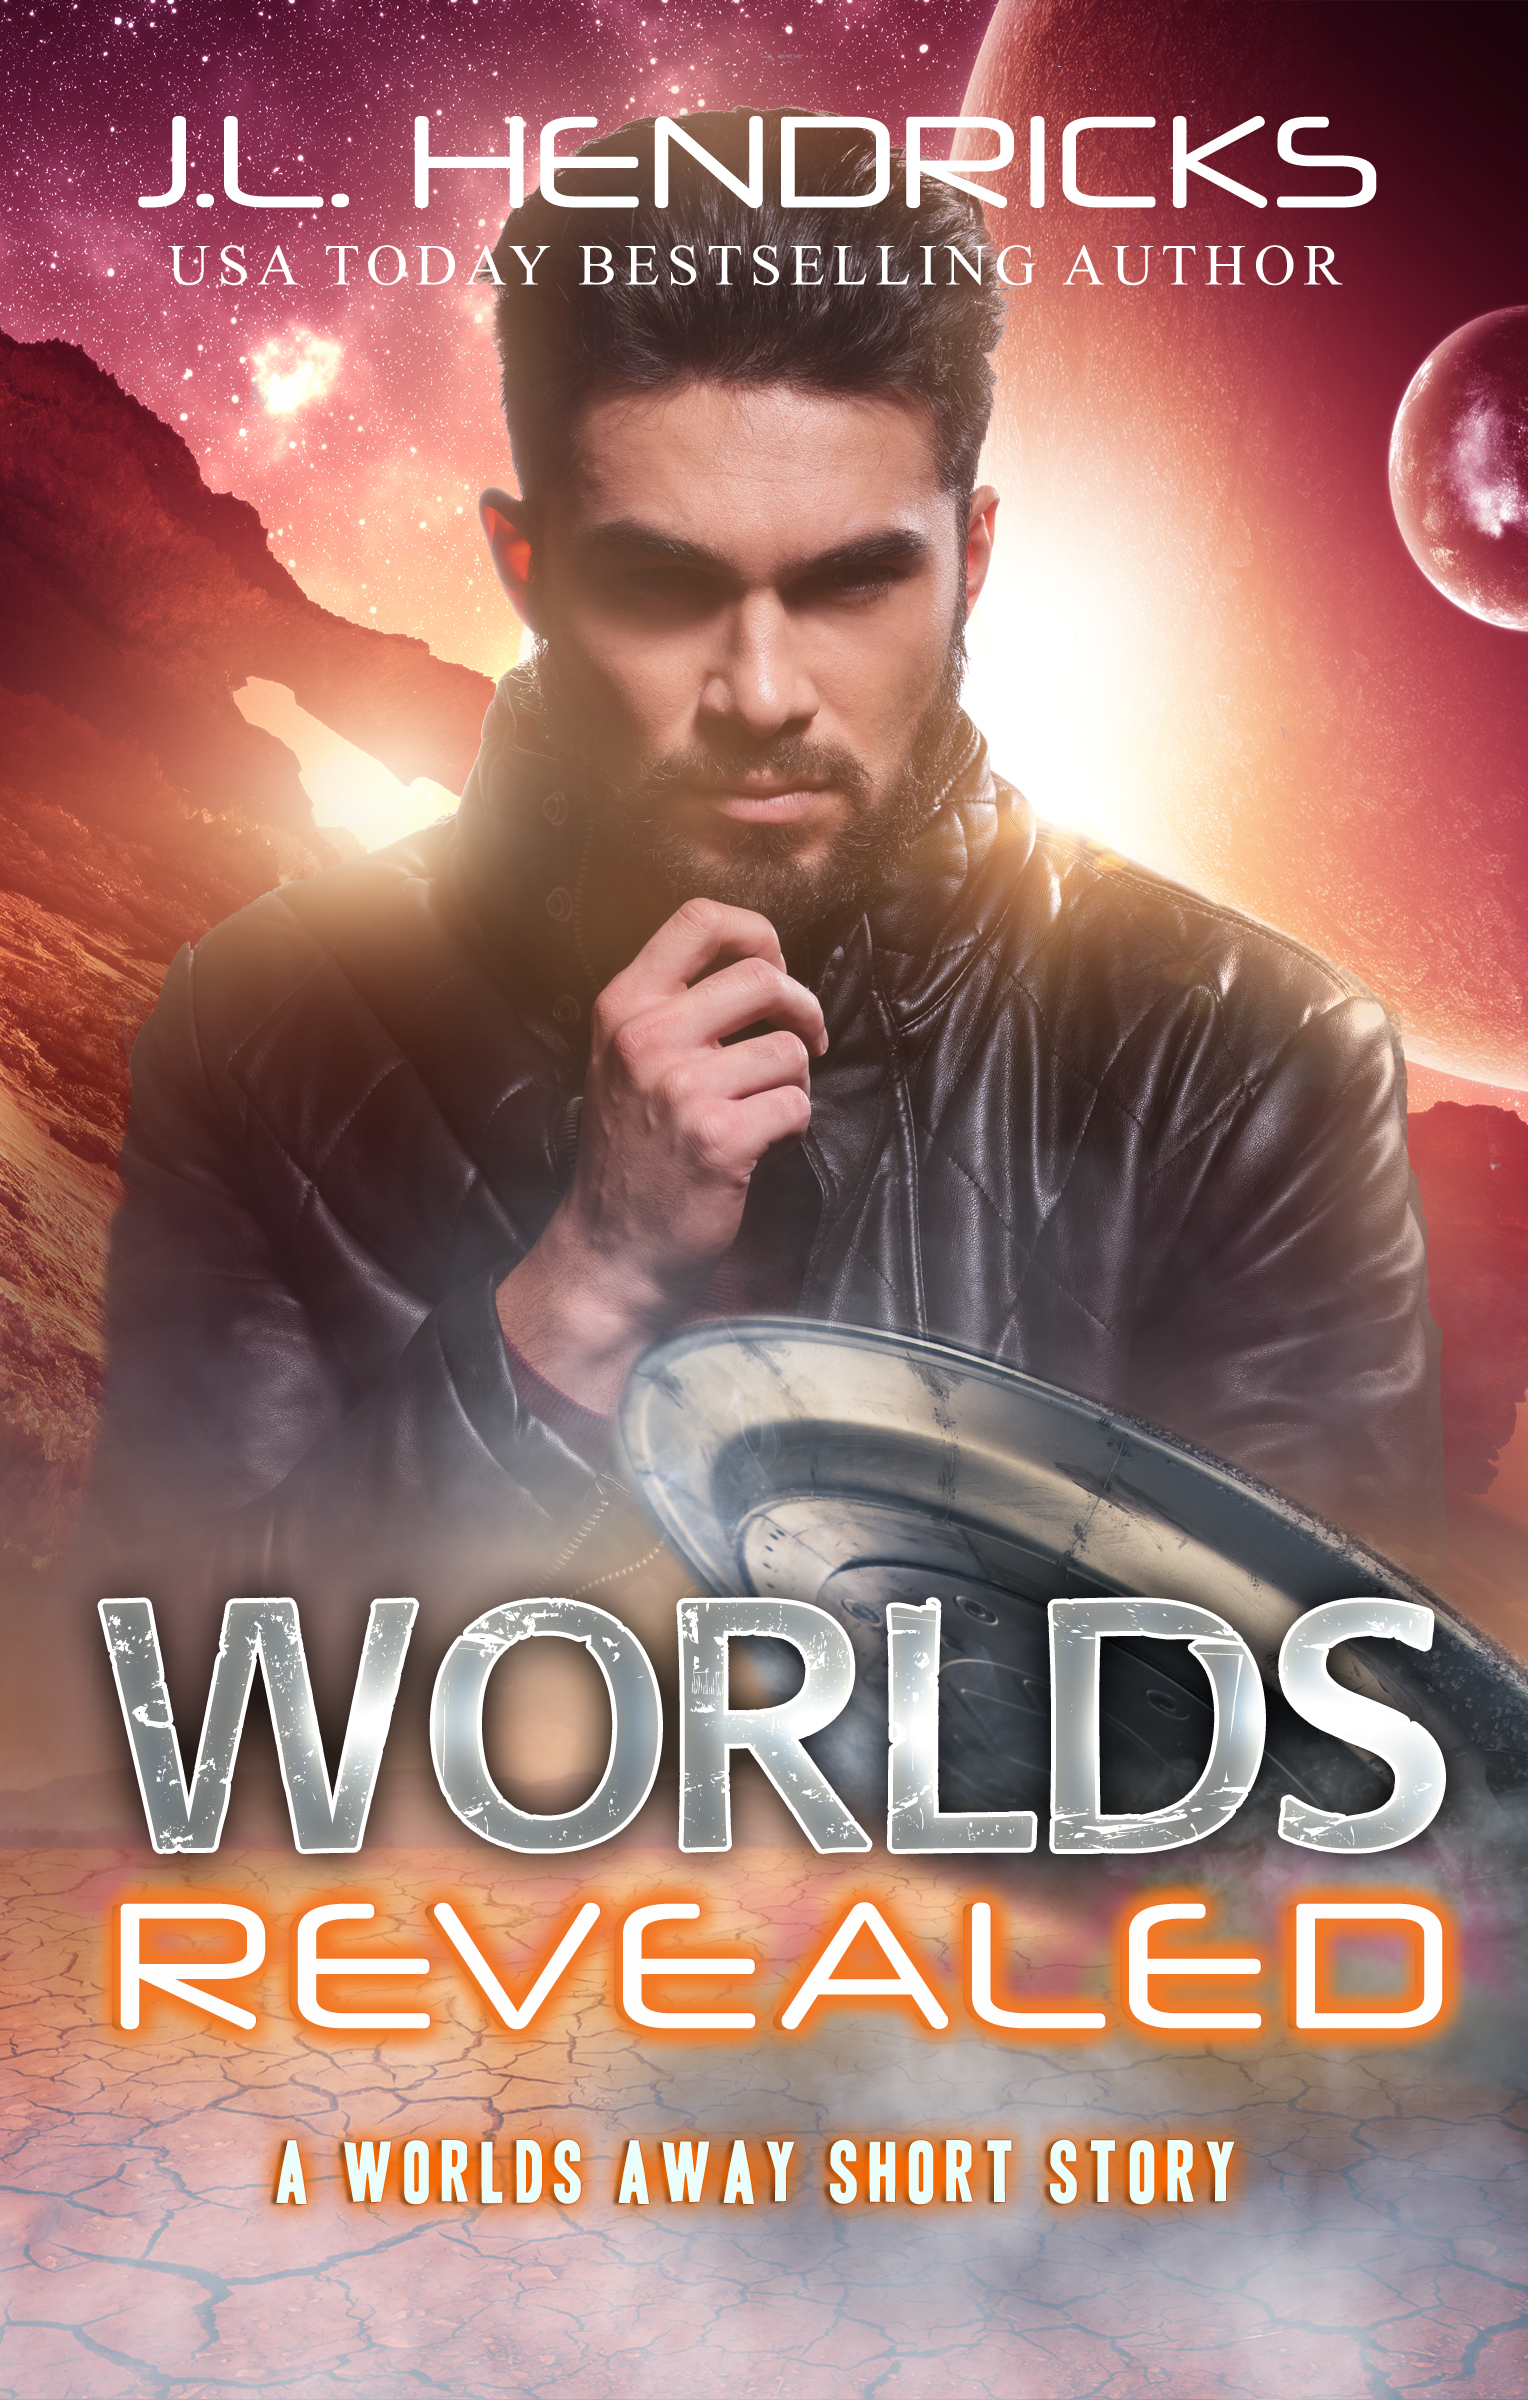 The Worlds Away Series Companion Novella: Worlds Revealed